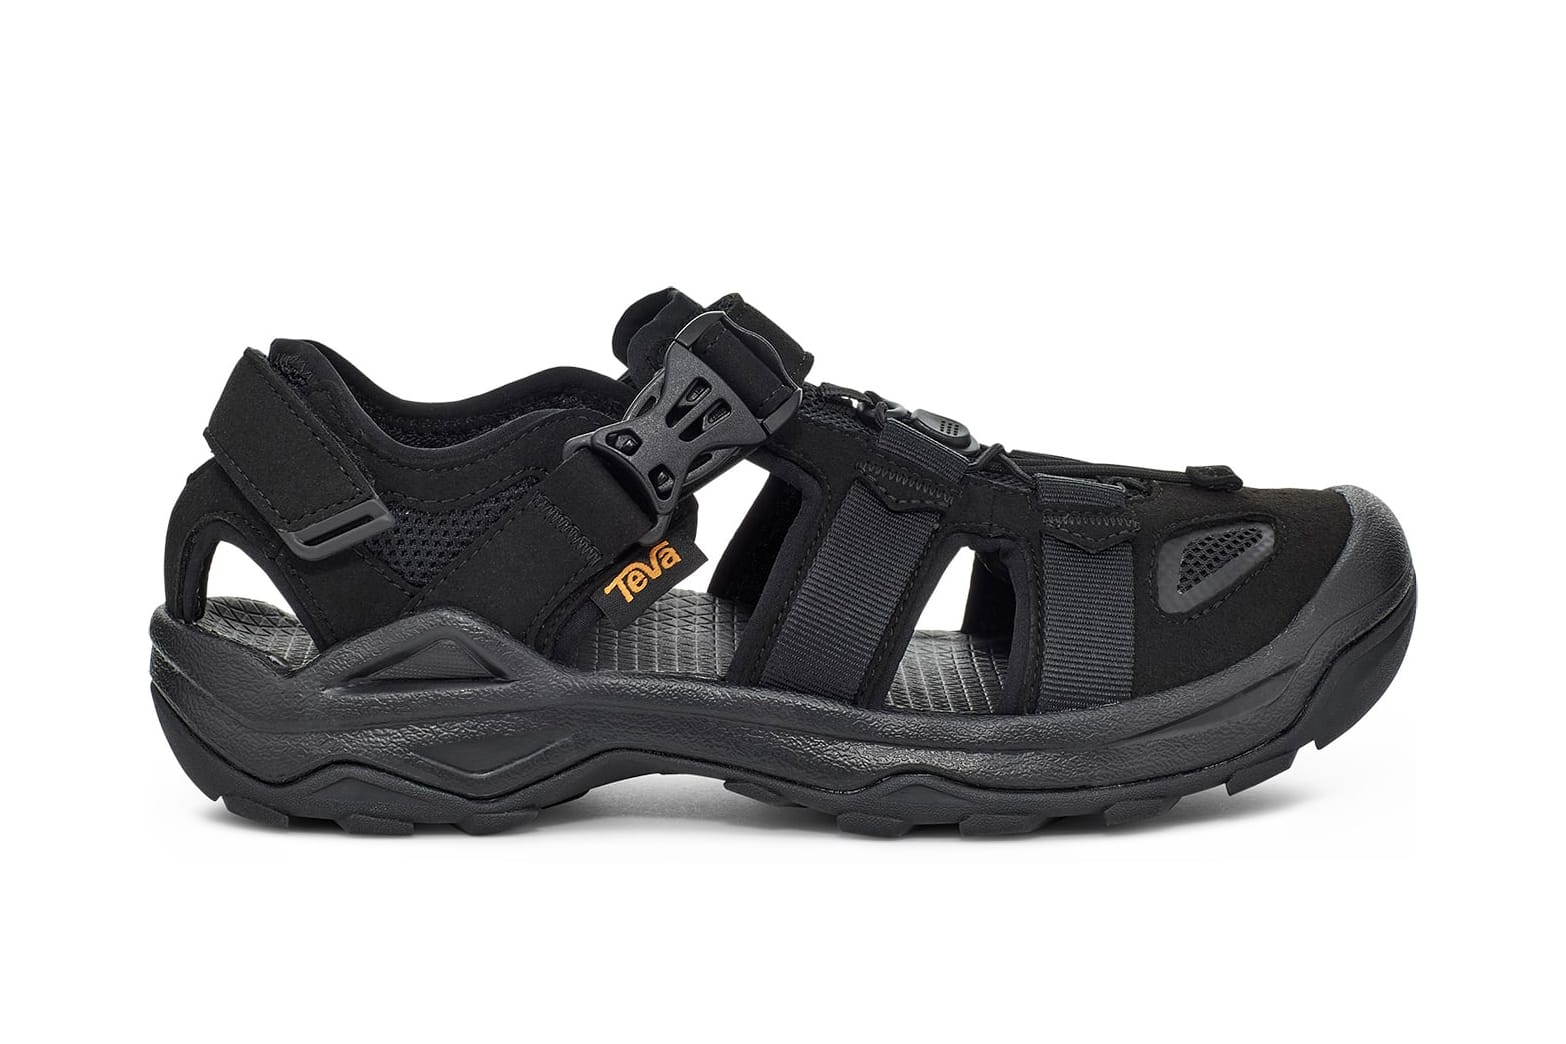 New review: Teva Terra Fi 4 sandals